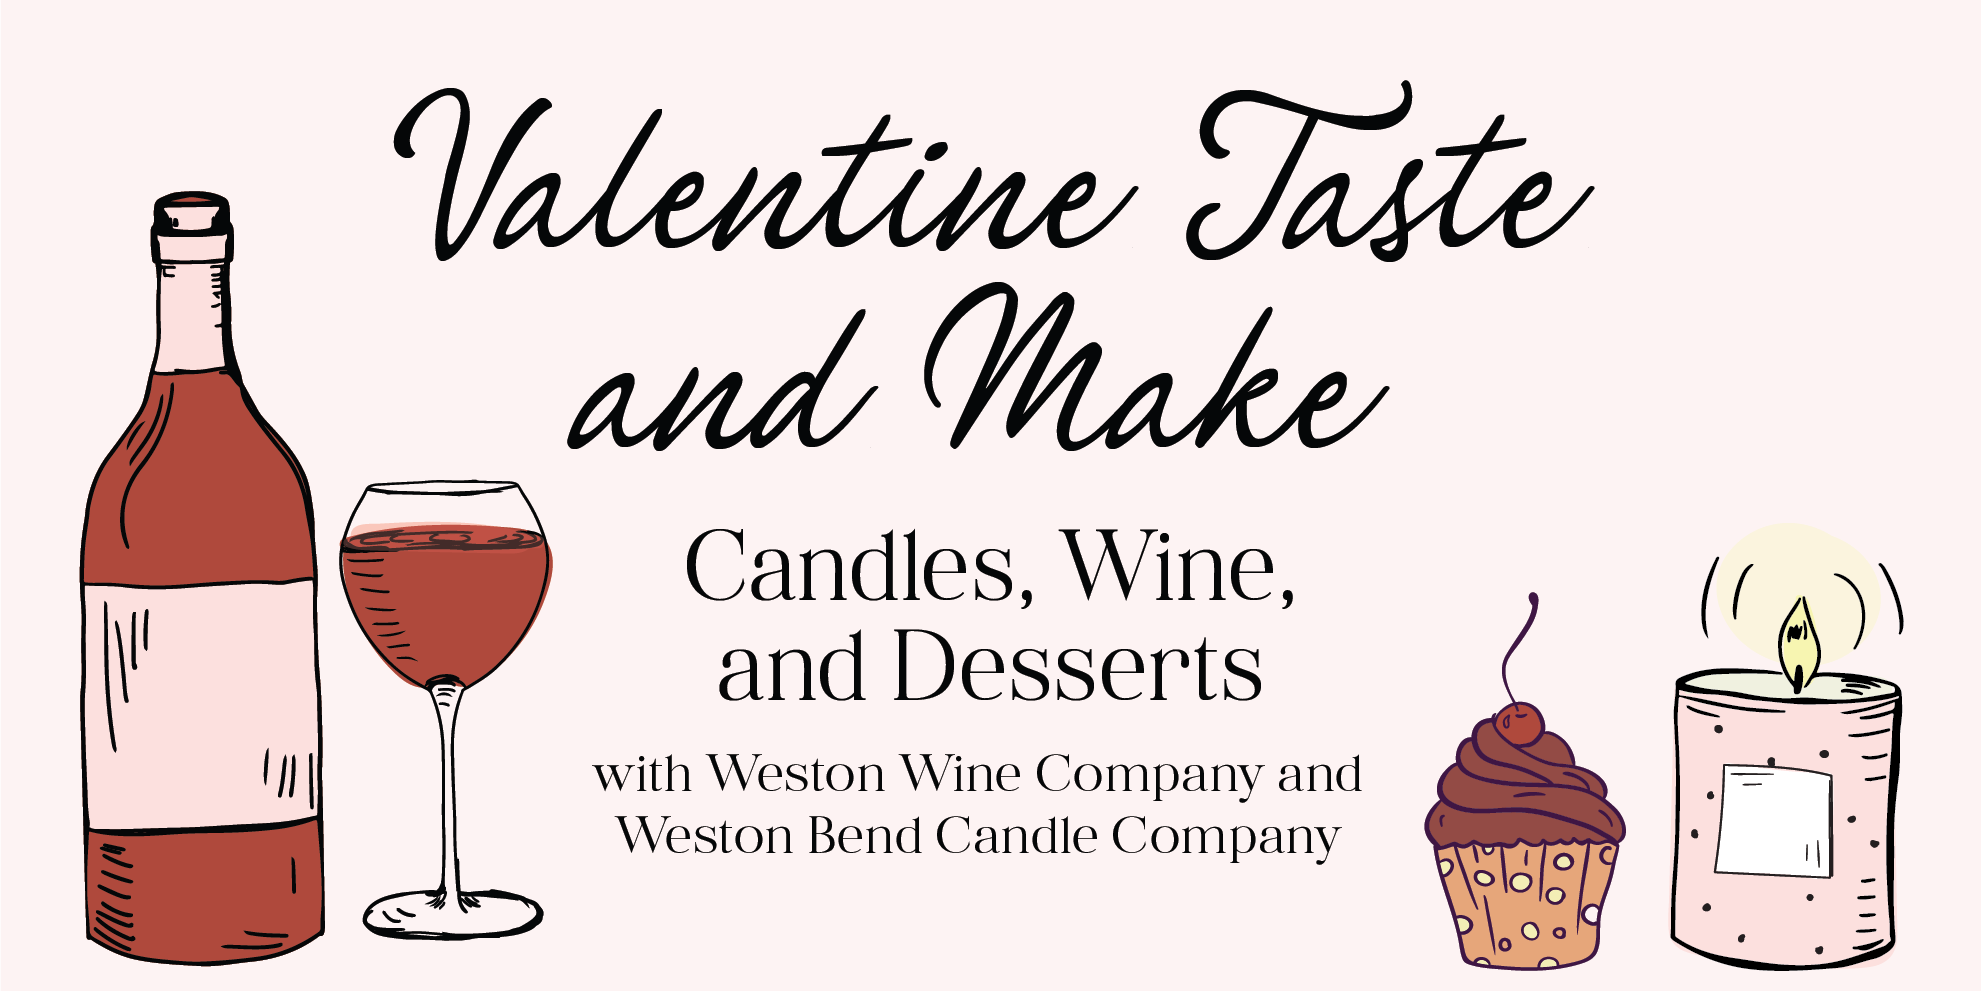 Valentine Taste & Make - Wine, Candles, and Desserts! promotional image